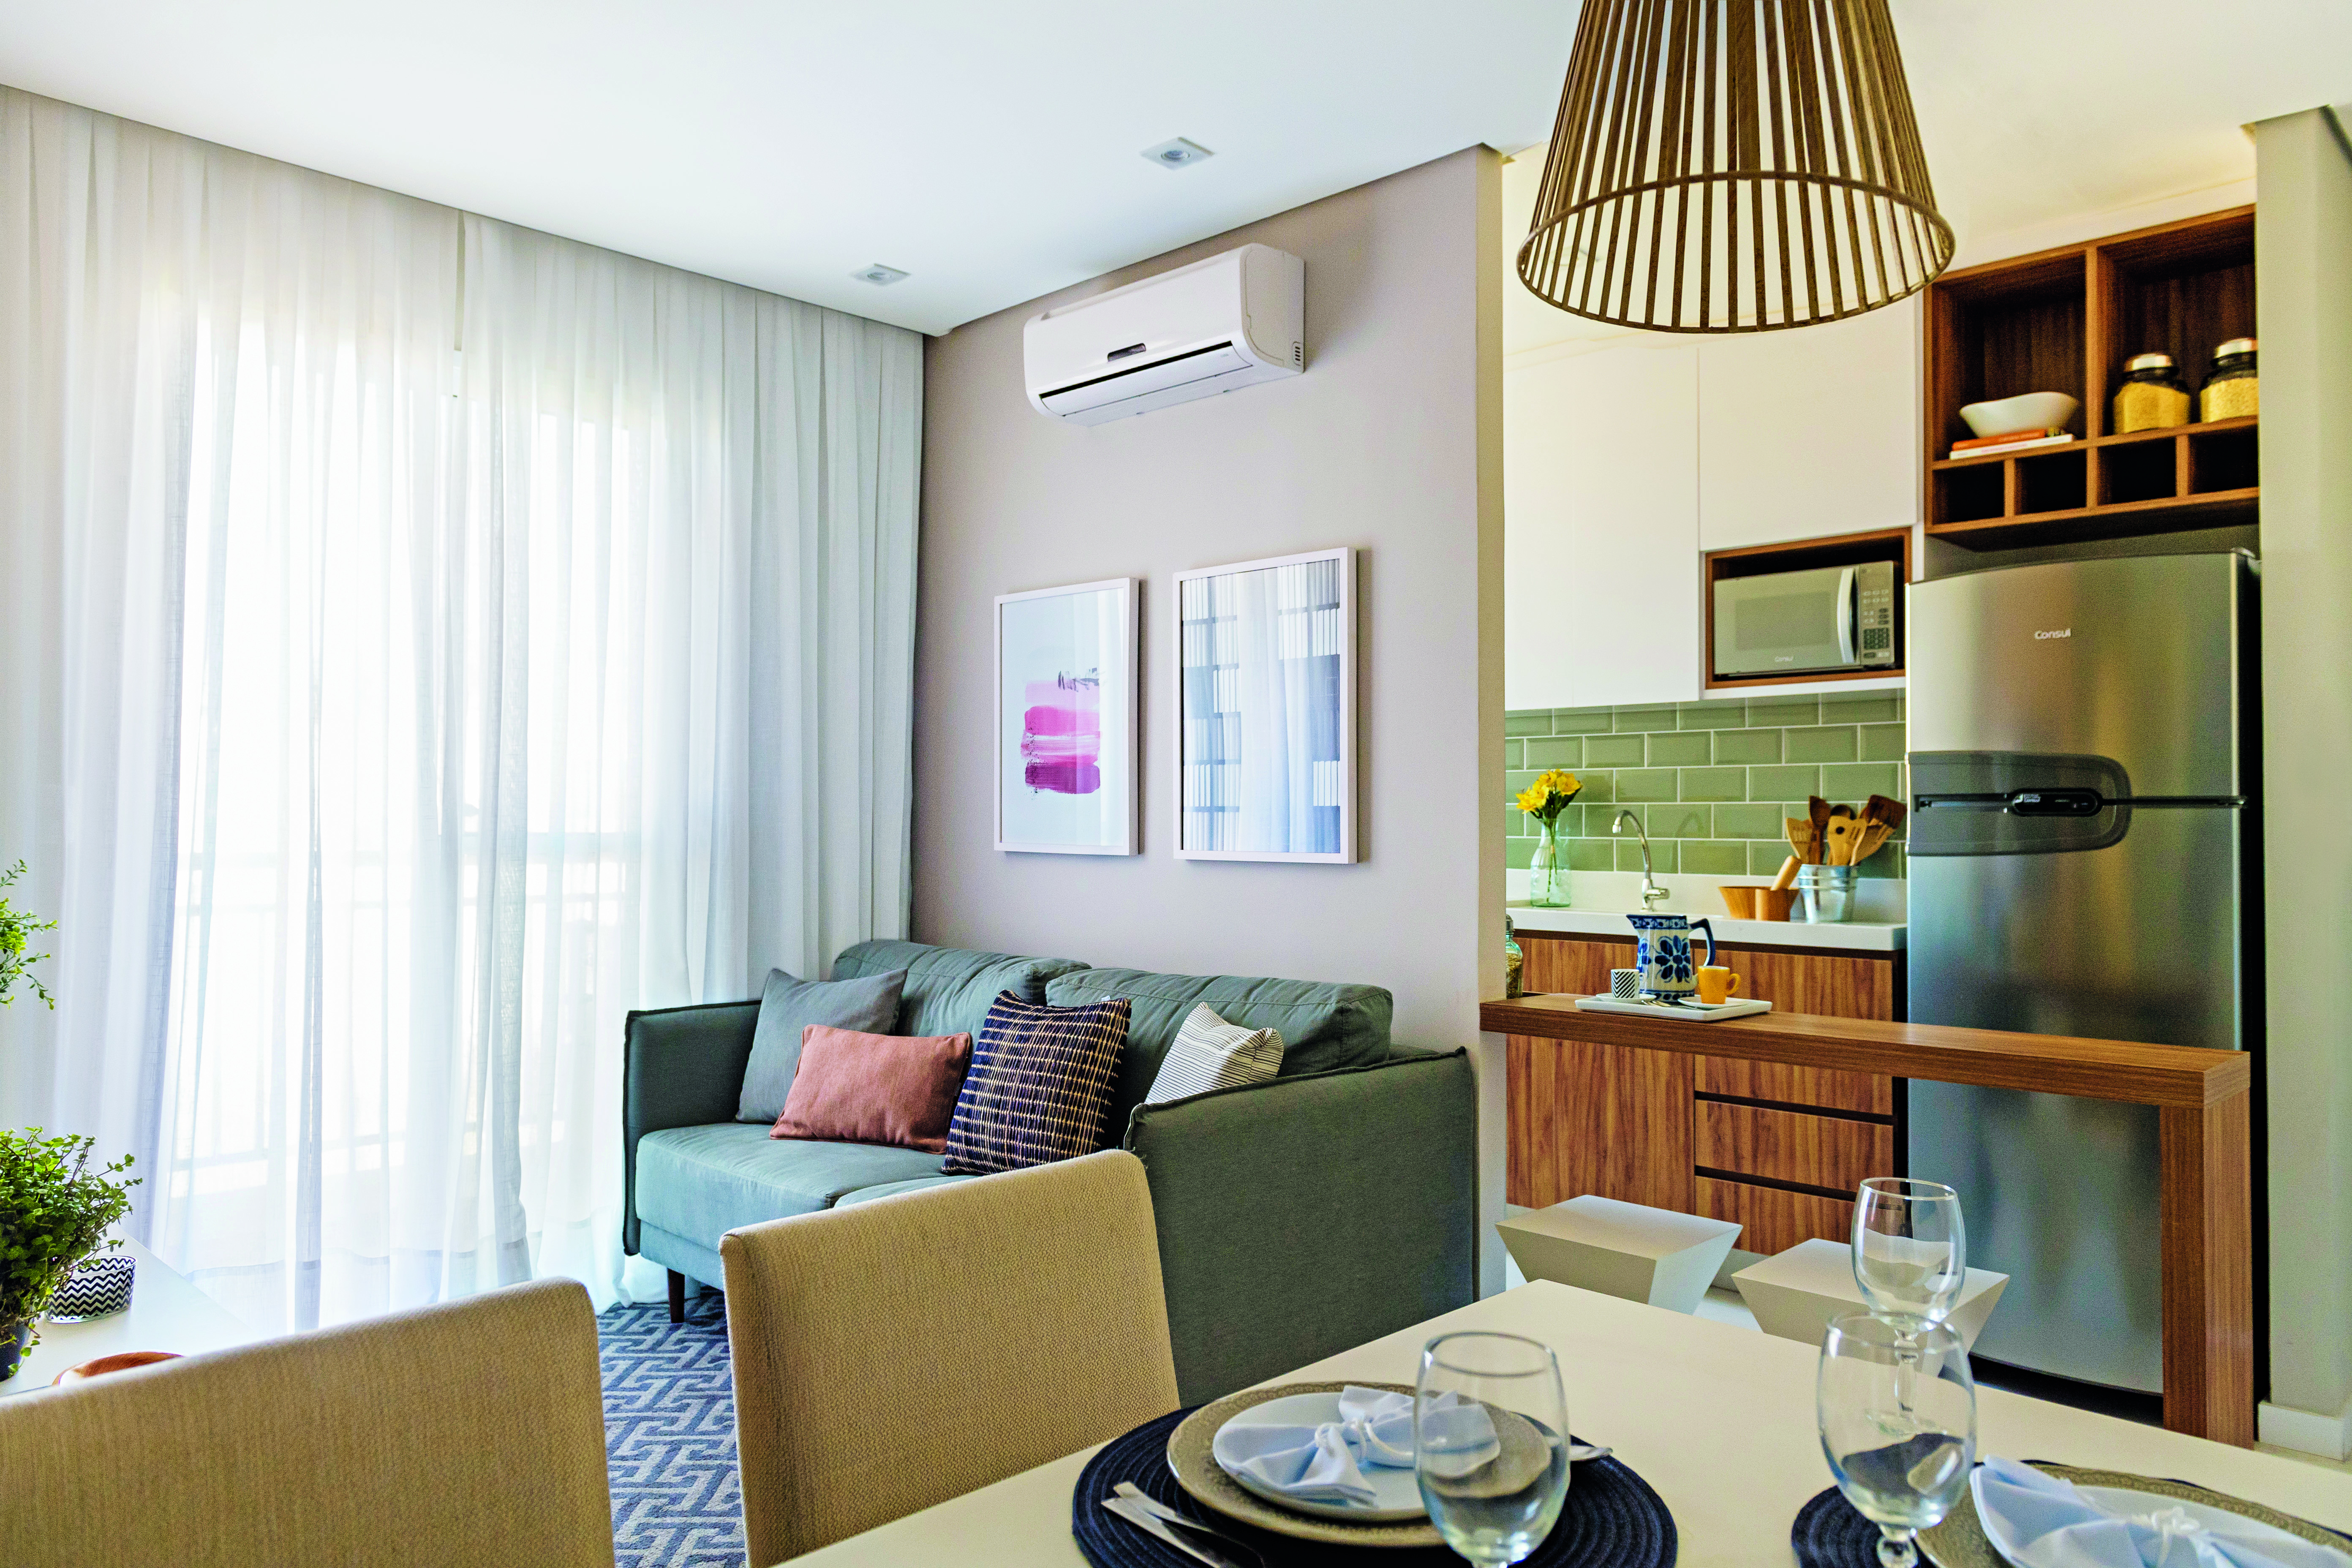  Klein appartement: 45 m² ingericht met charme en stijl